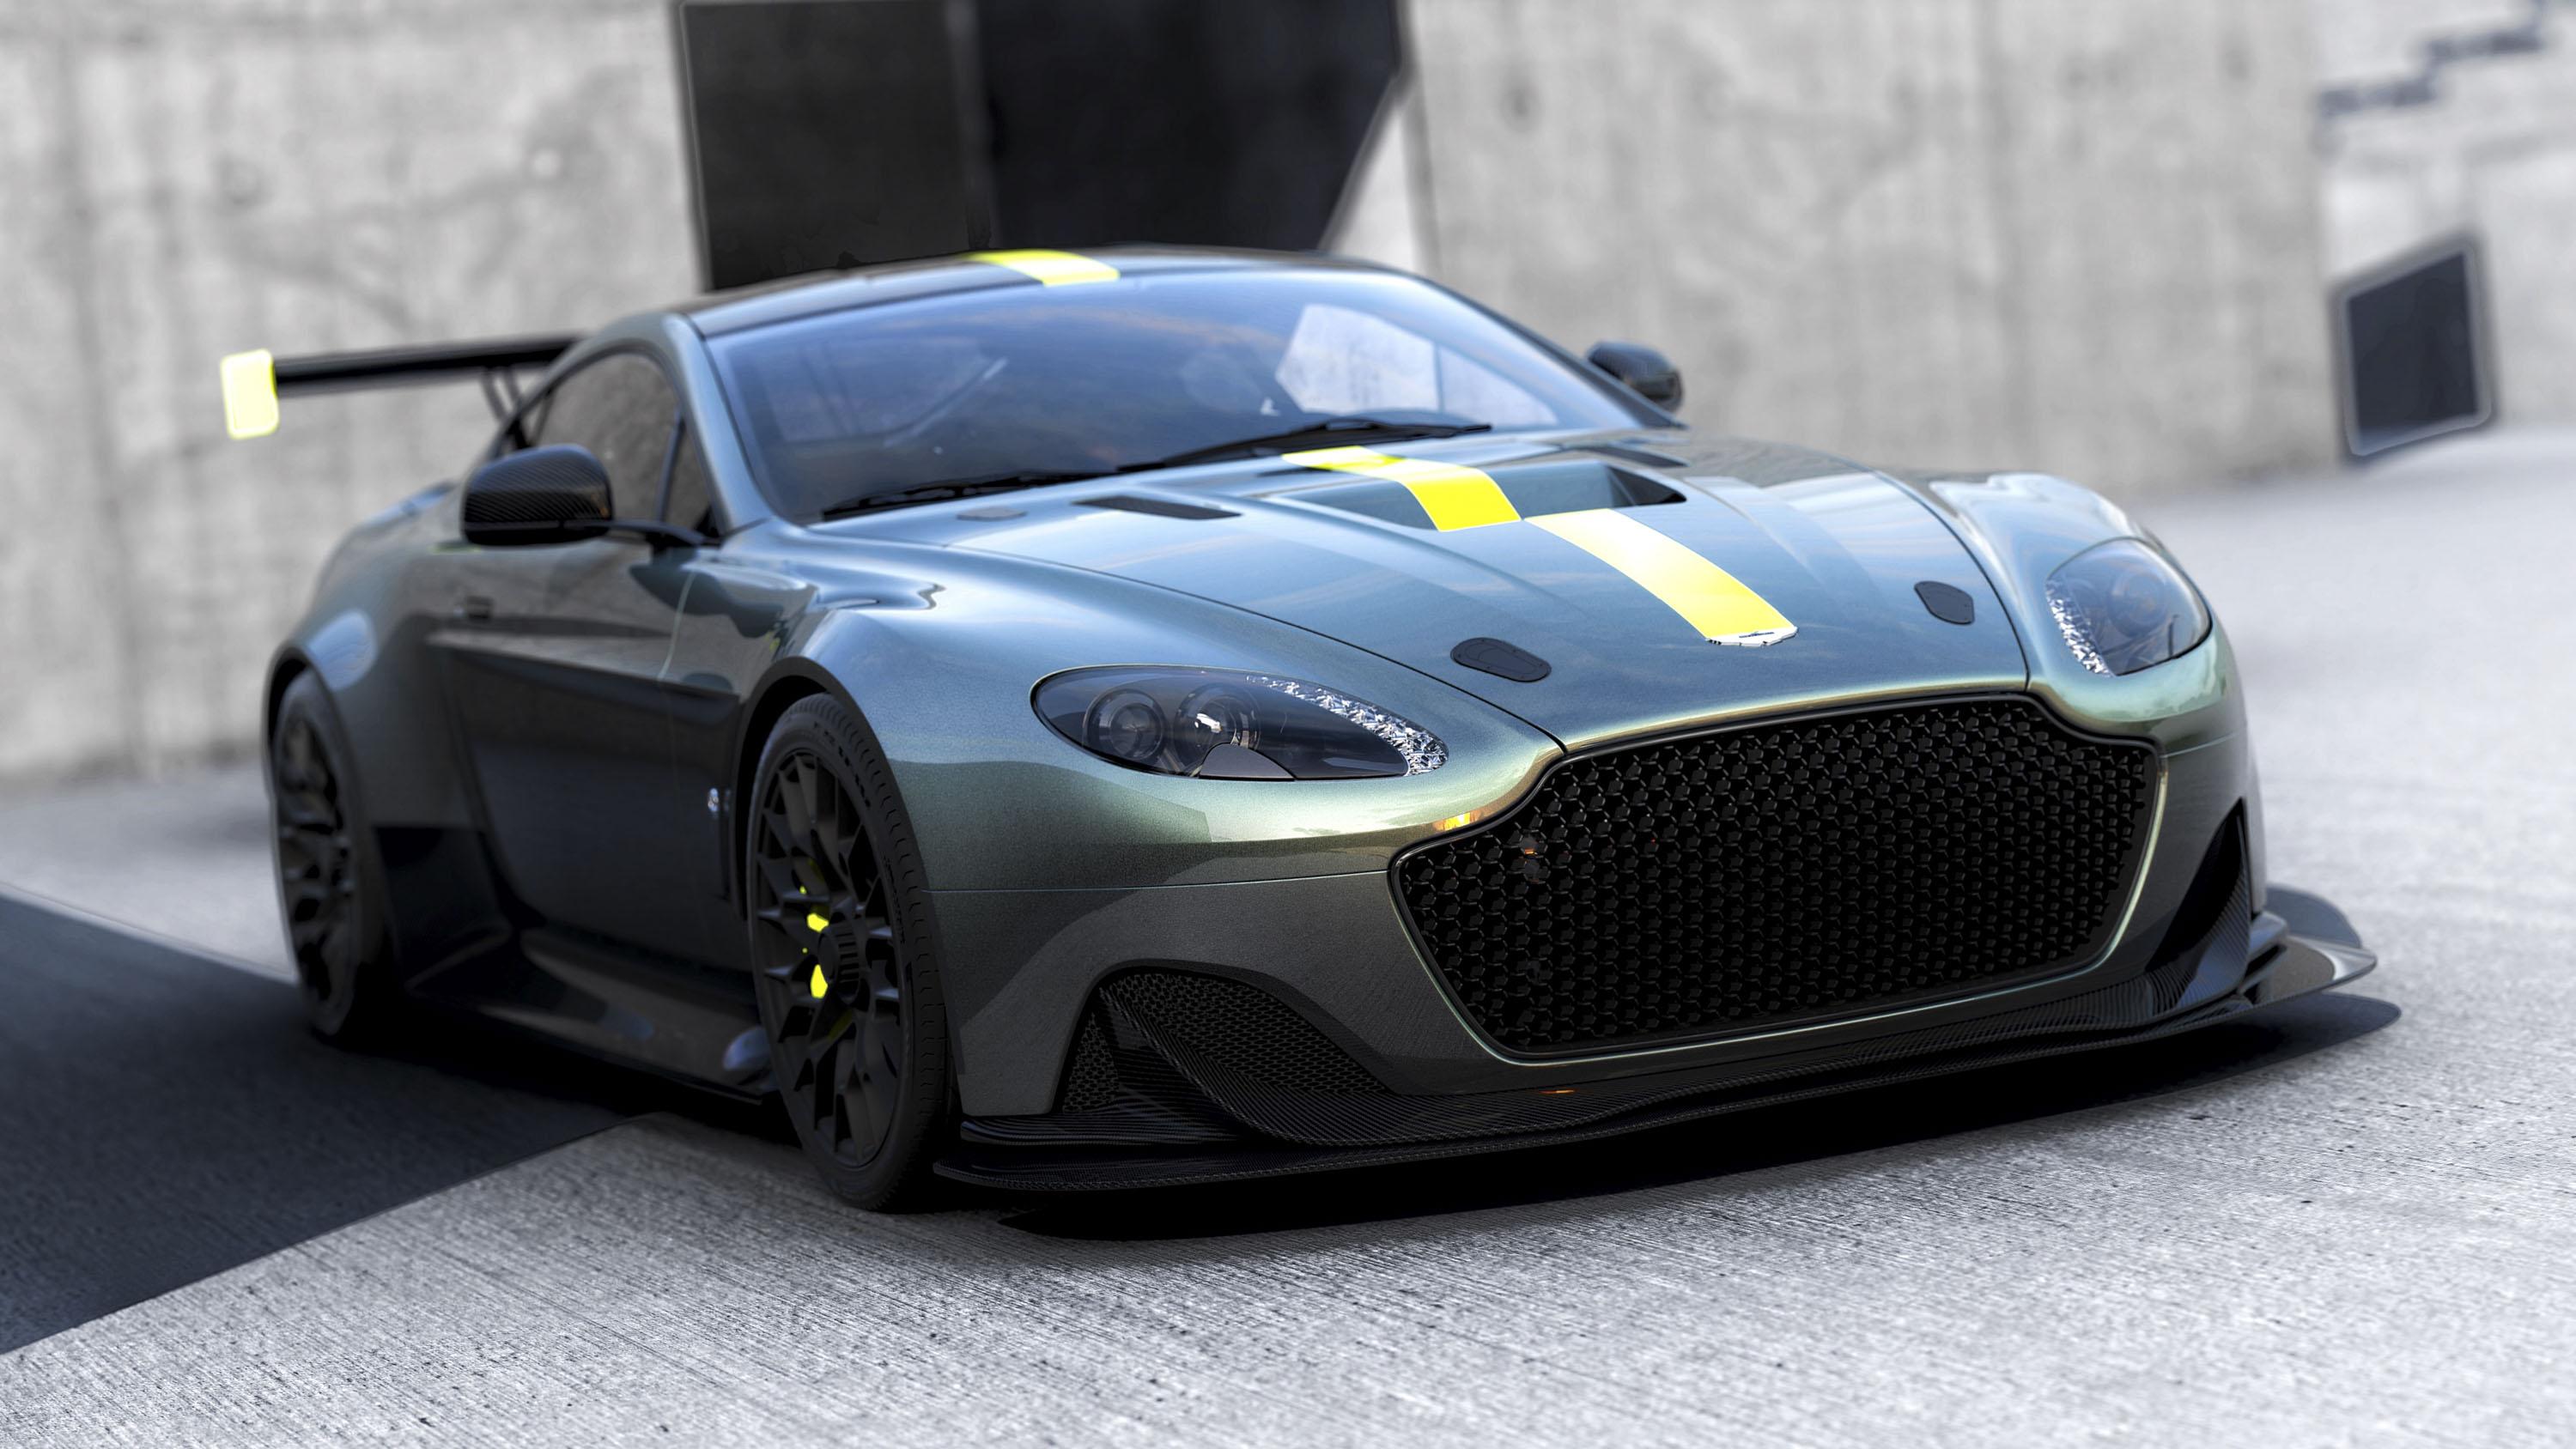 Aston Martin Vantage AMR Pro Concept Picture, Photo